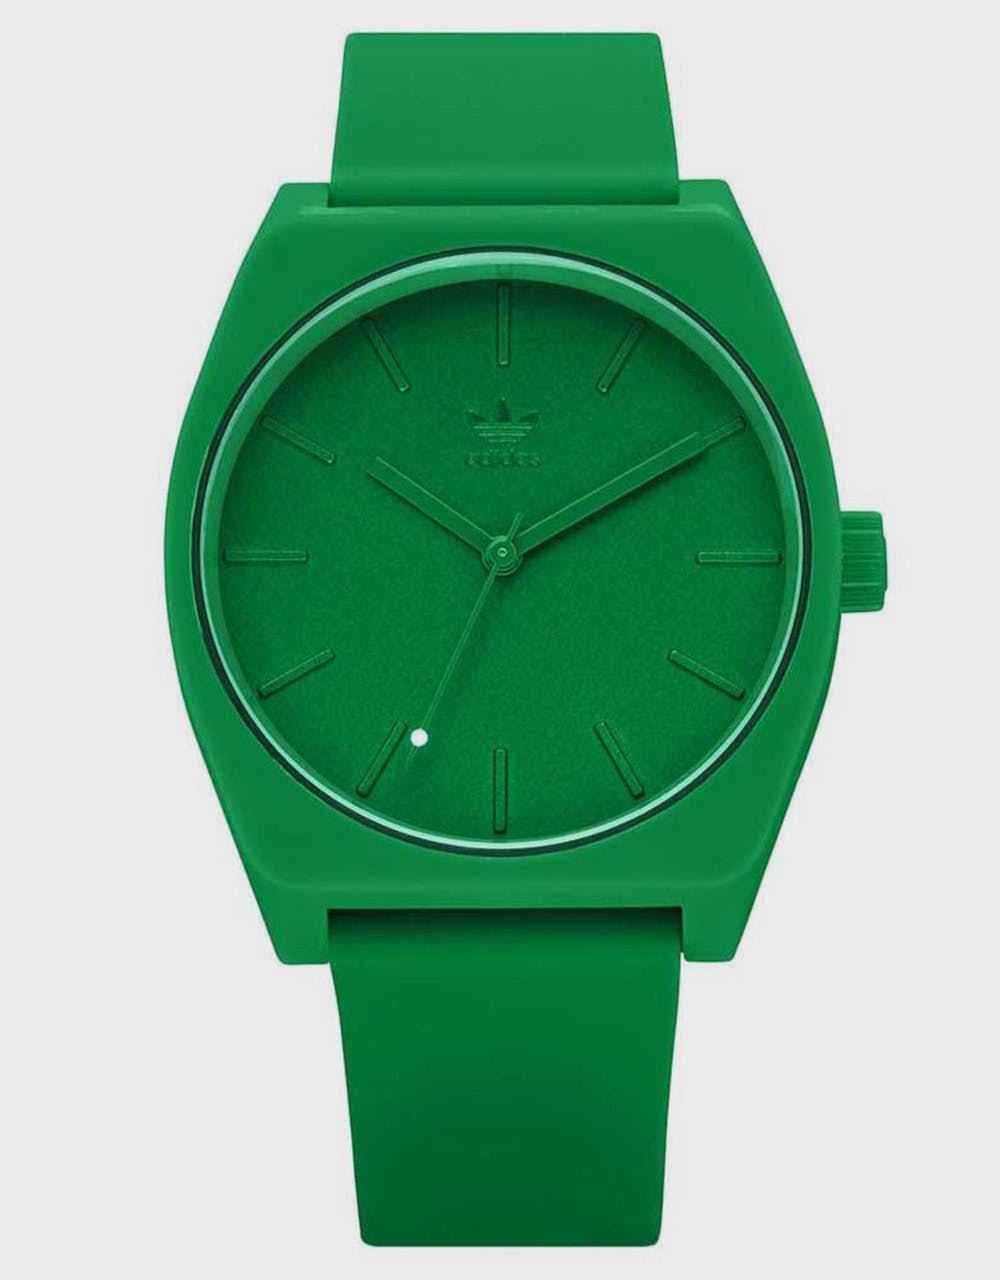 Adidas Process SP1 Watch - All Green